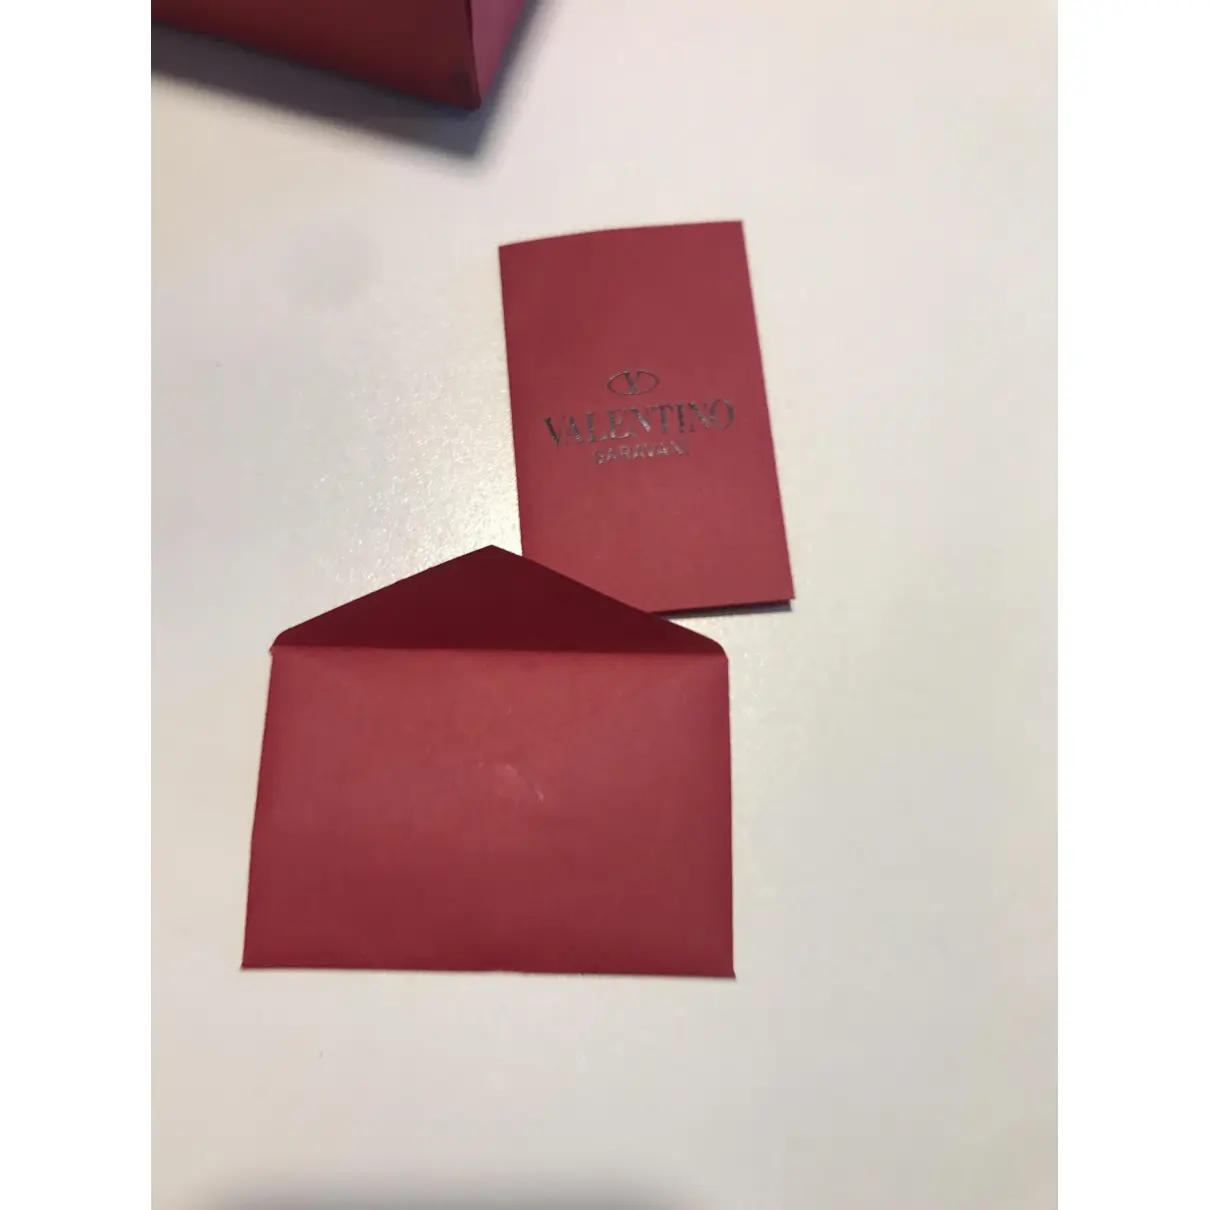 Leather flats Red Valentino Garavani